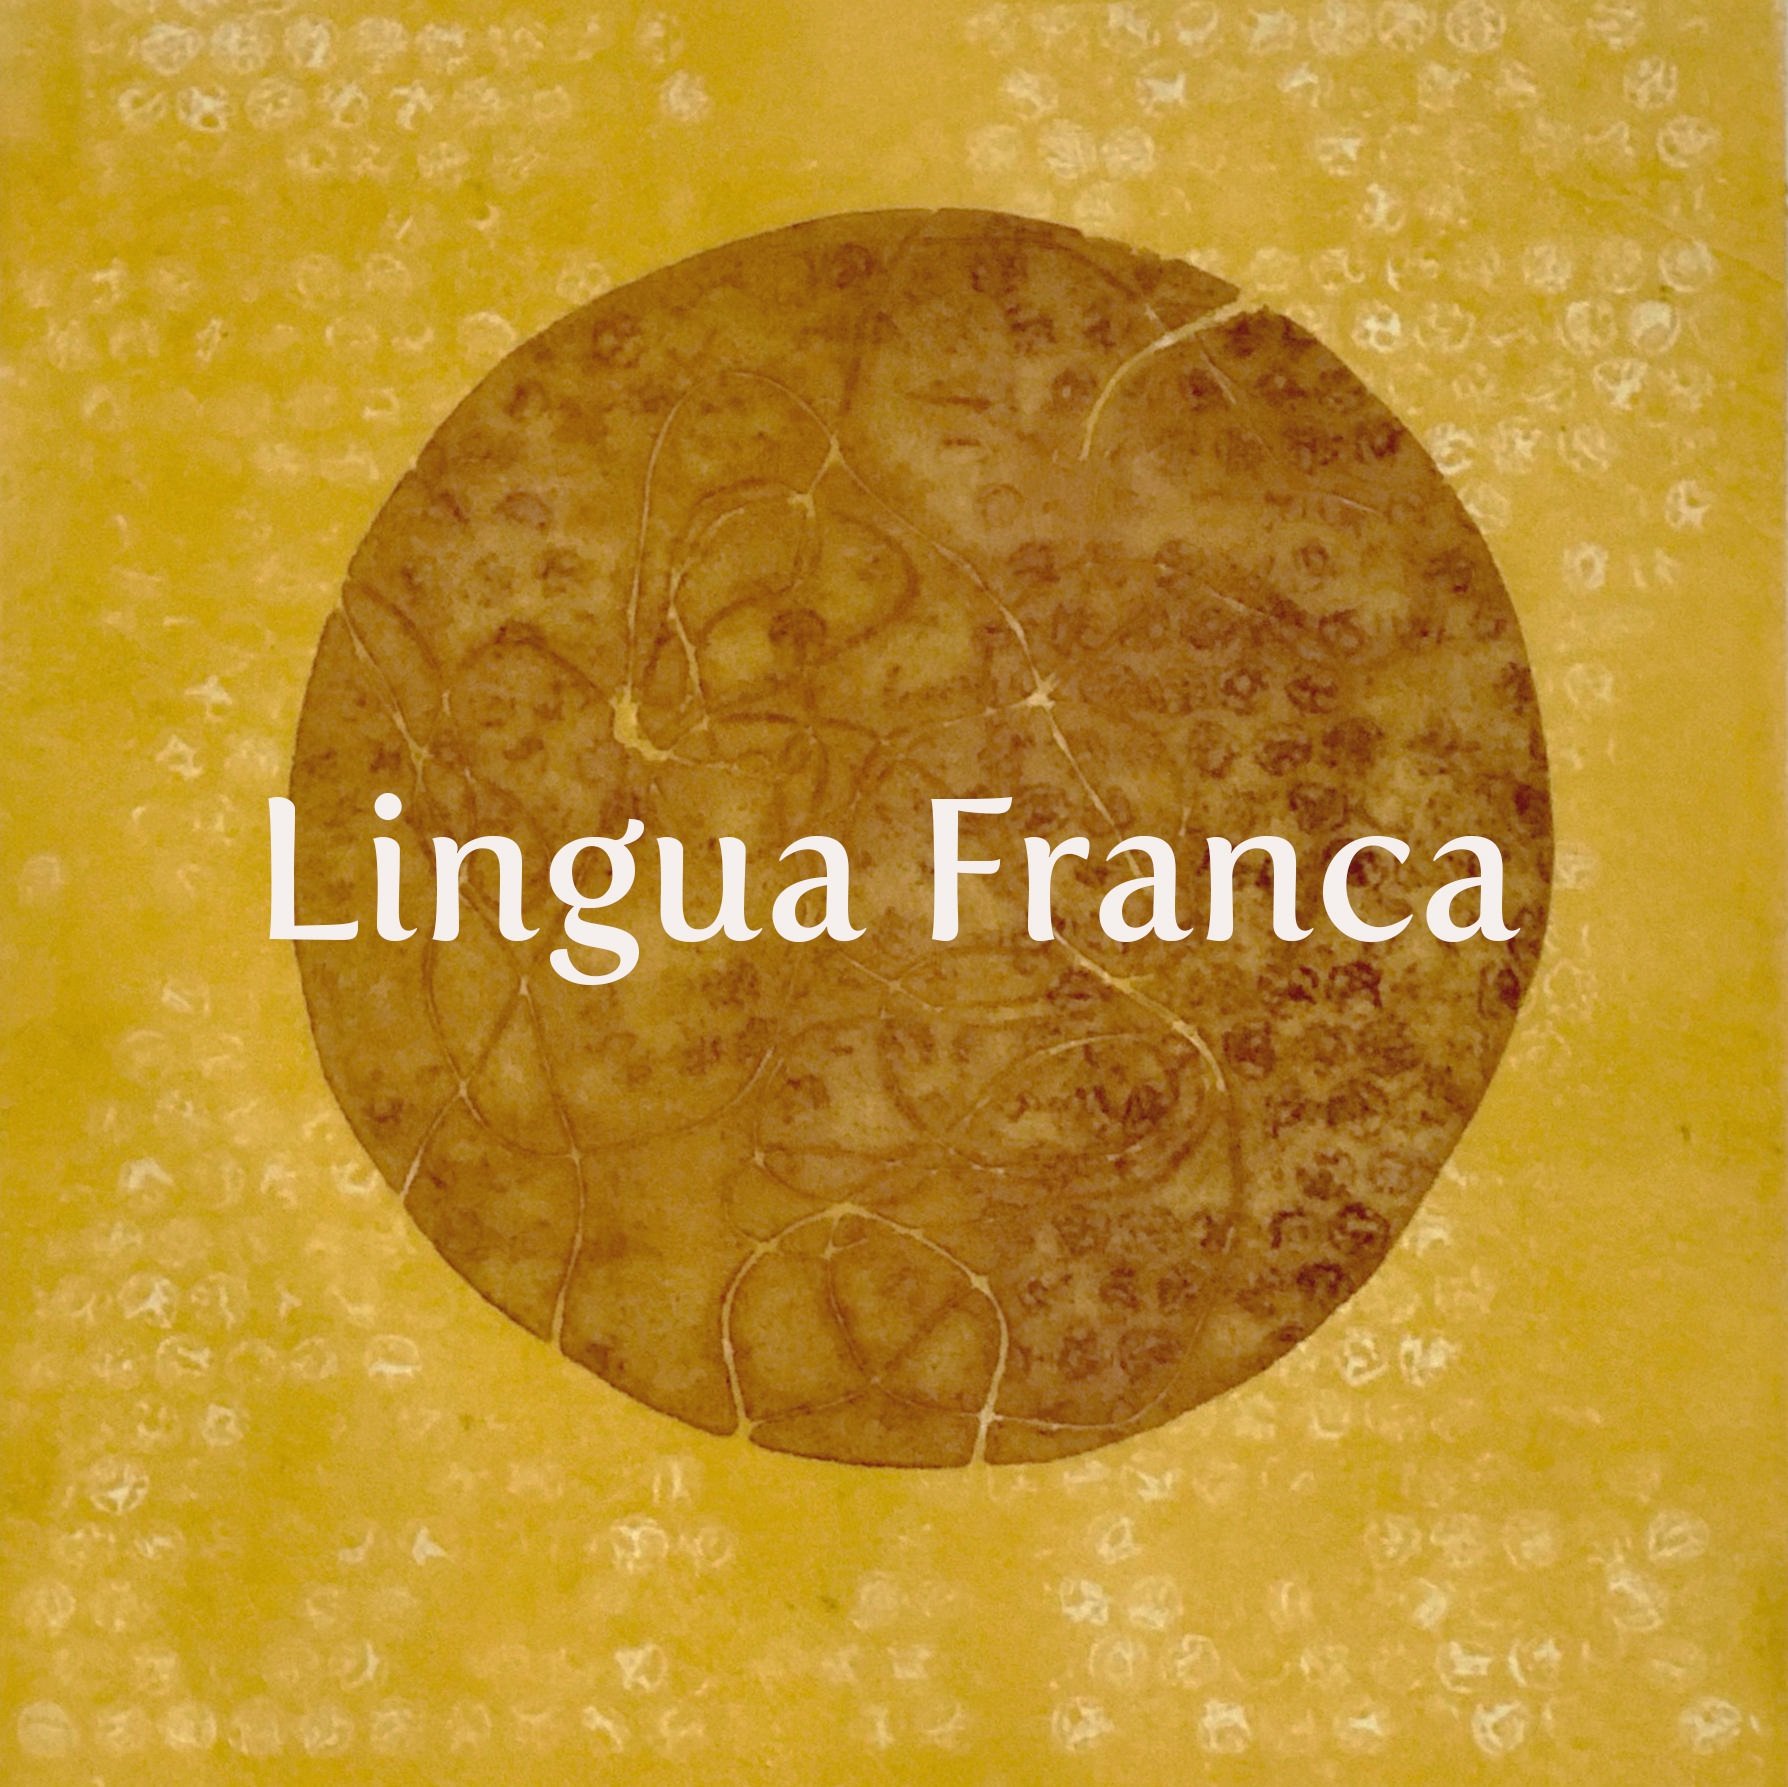 LINGUA FRANCA for Home Page rev'd COMPRESSED_.jpg